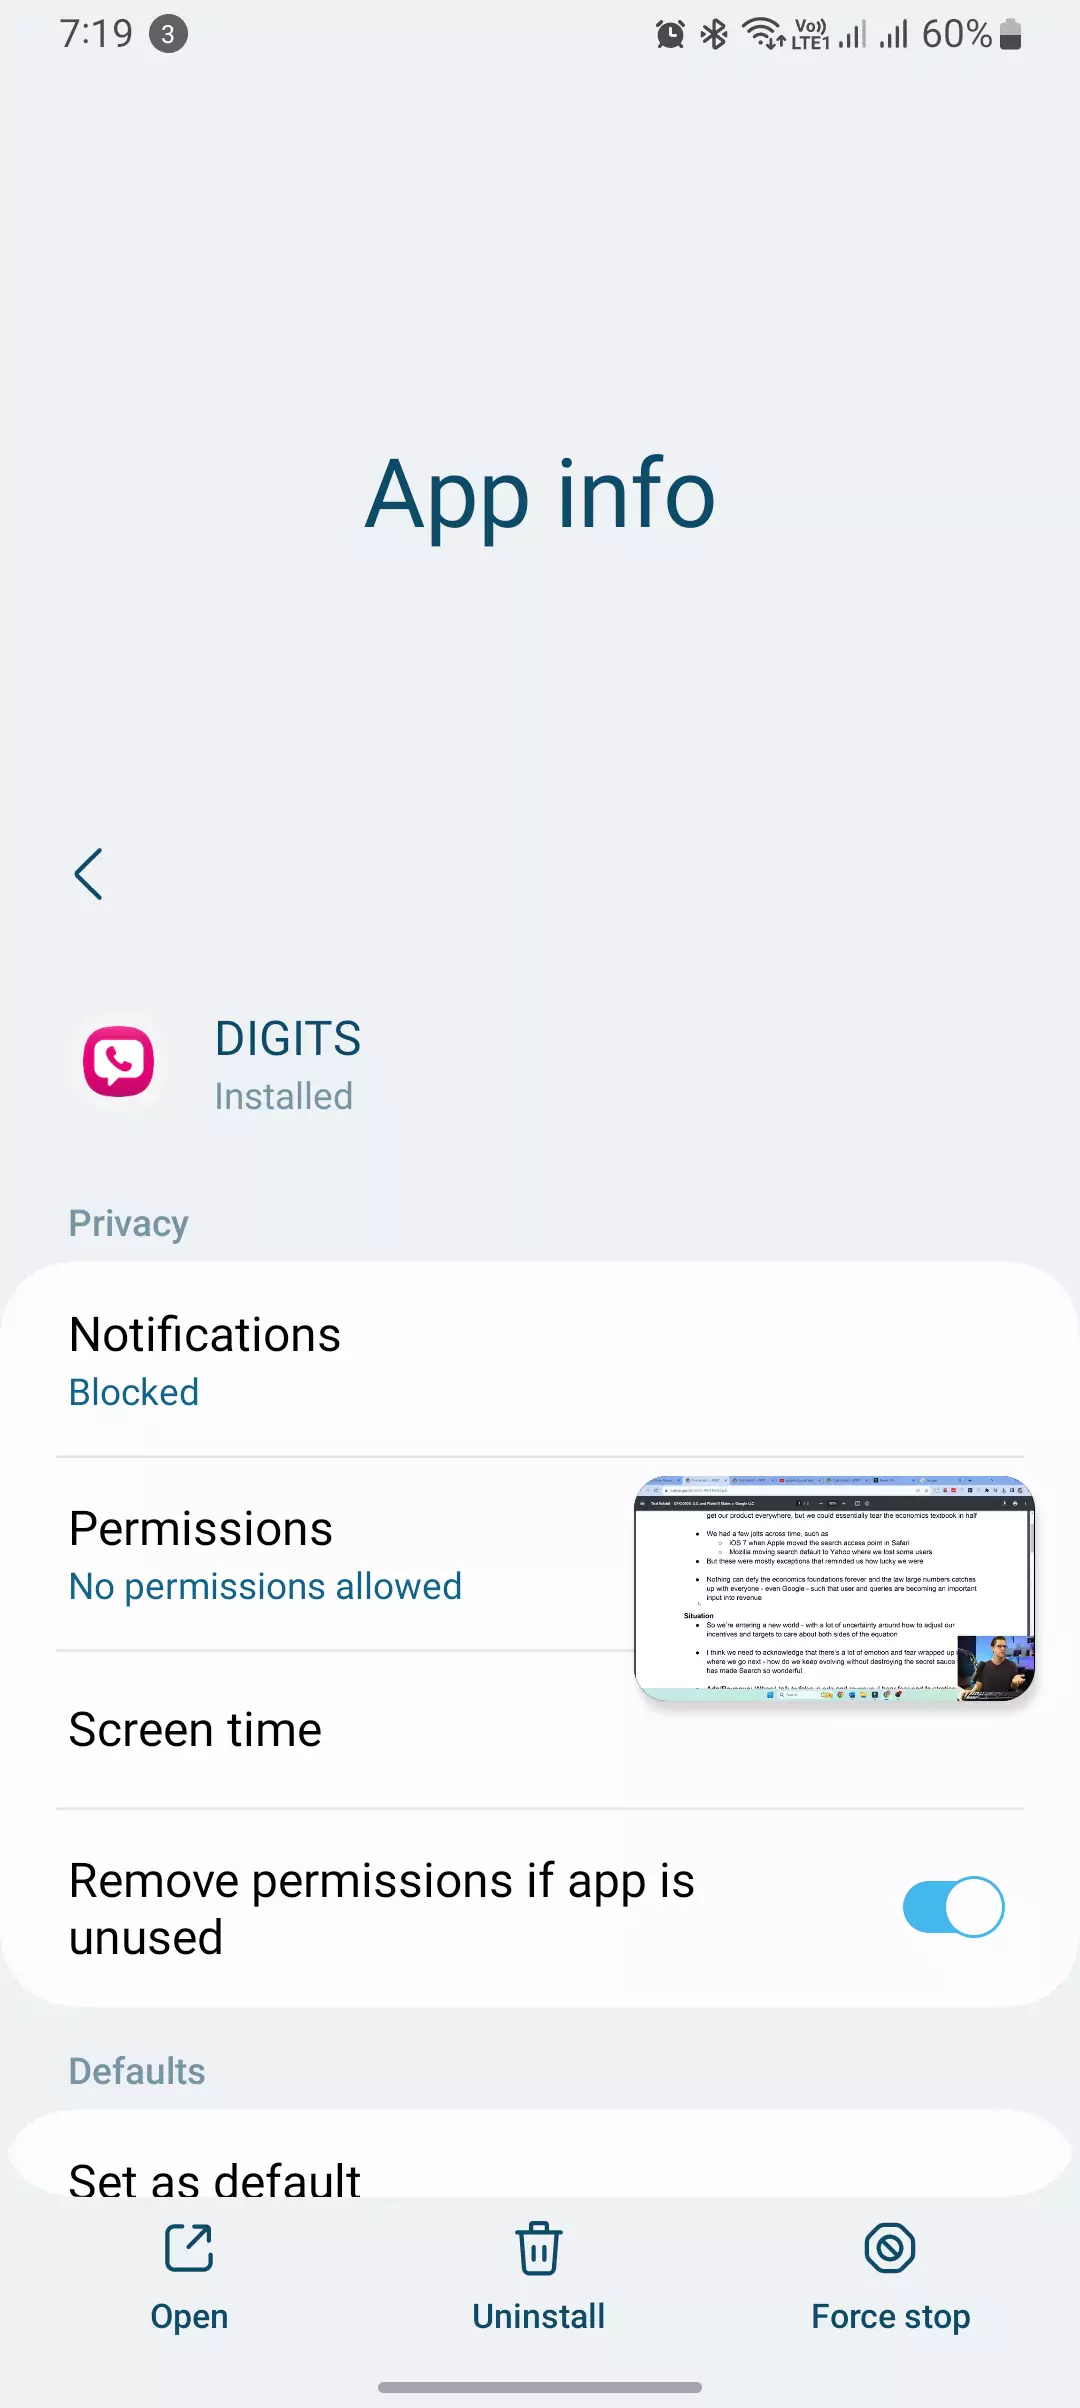 tmobile digit app info to uninstall